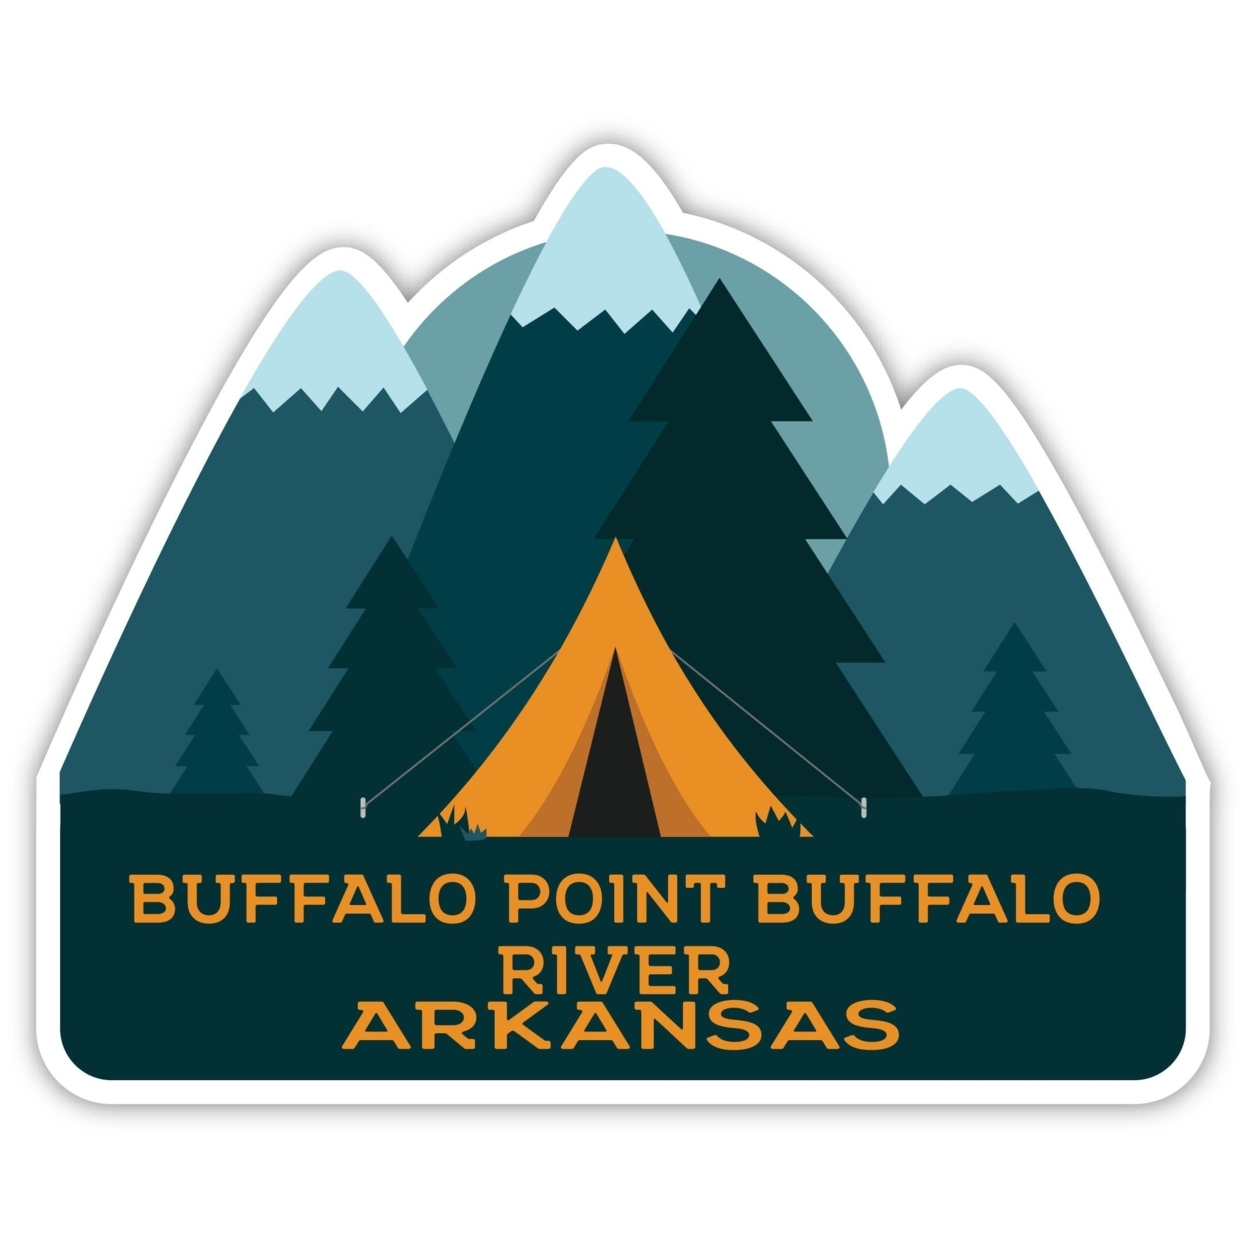 Buffalo Point Buffalo River Arkansas Souvenir Decorative Stickers (Choose Theme And Size) - 4-Pack, 2-Inch, Tent